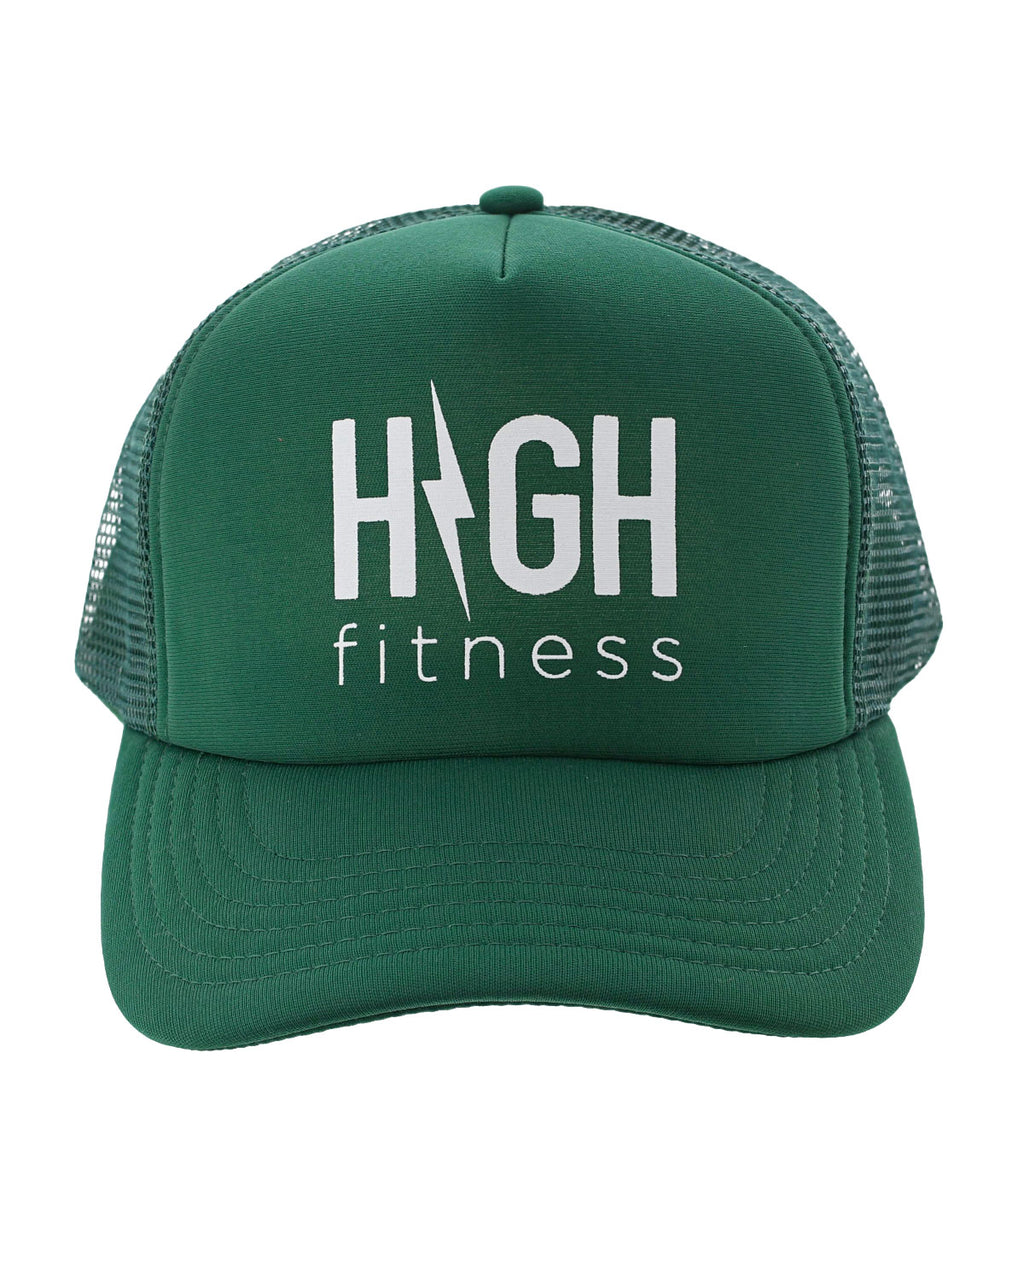 Forest Green Trucker Hat